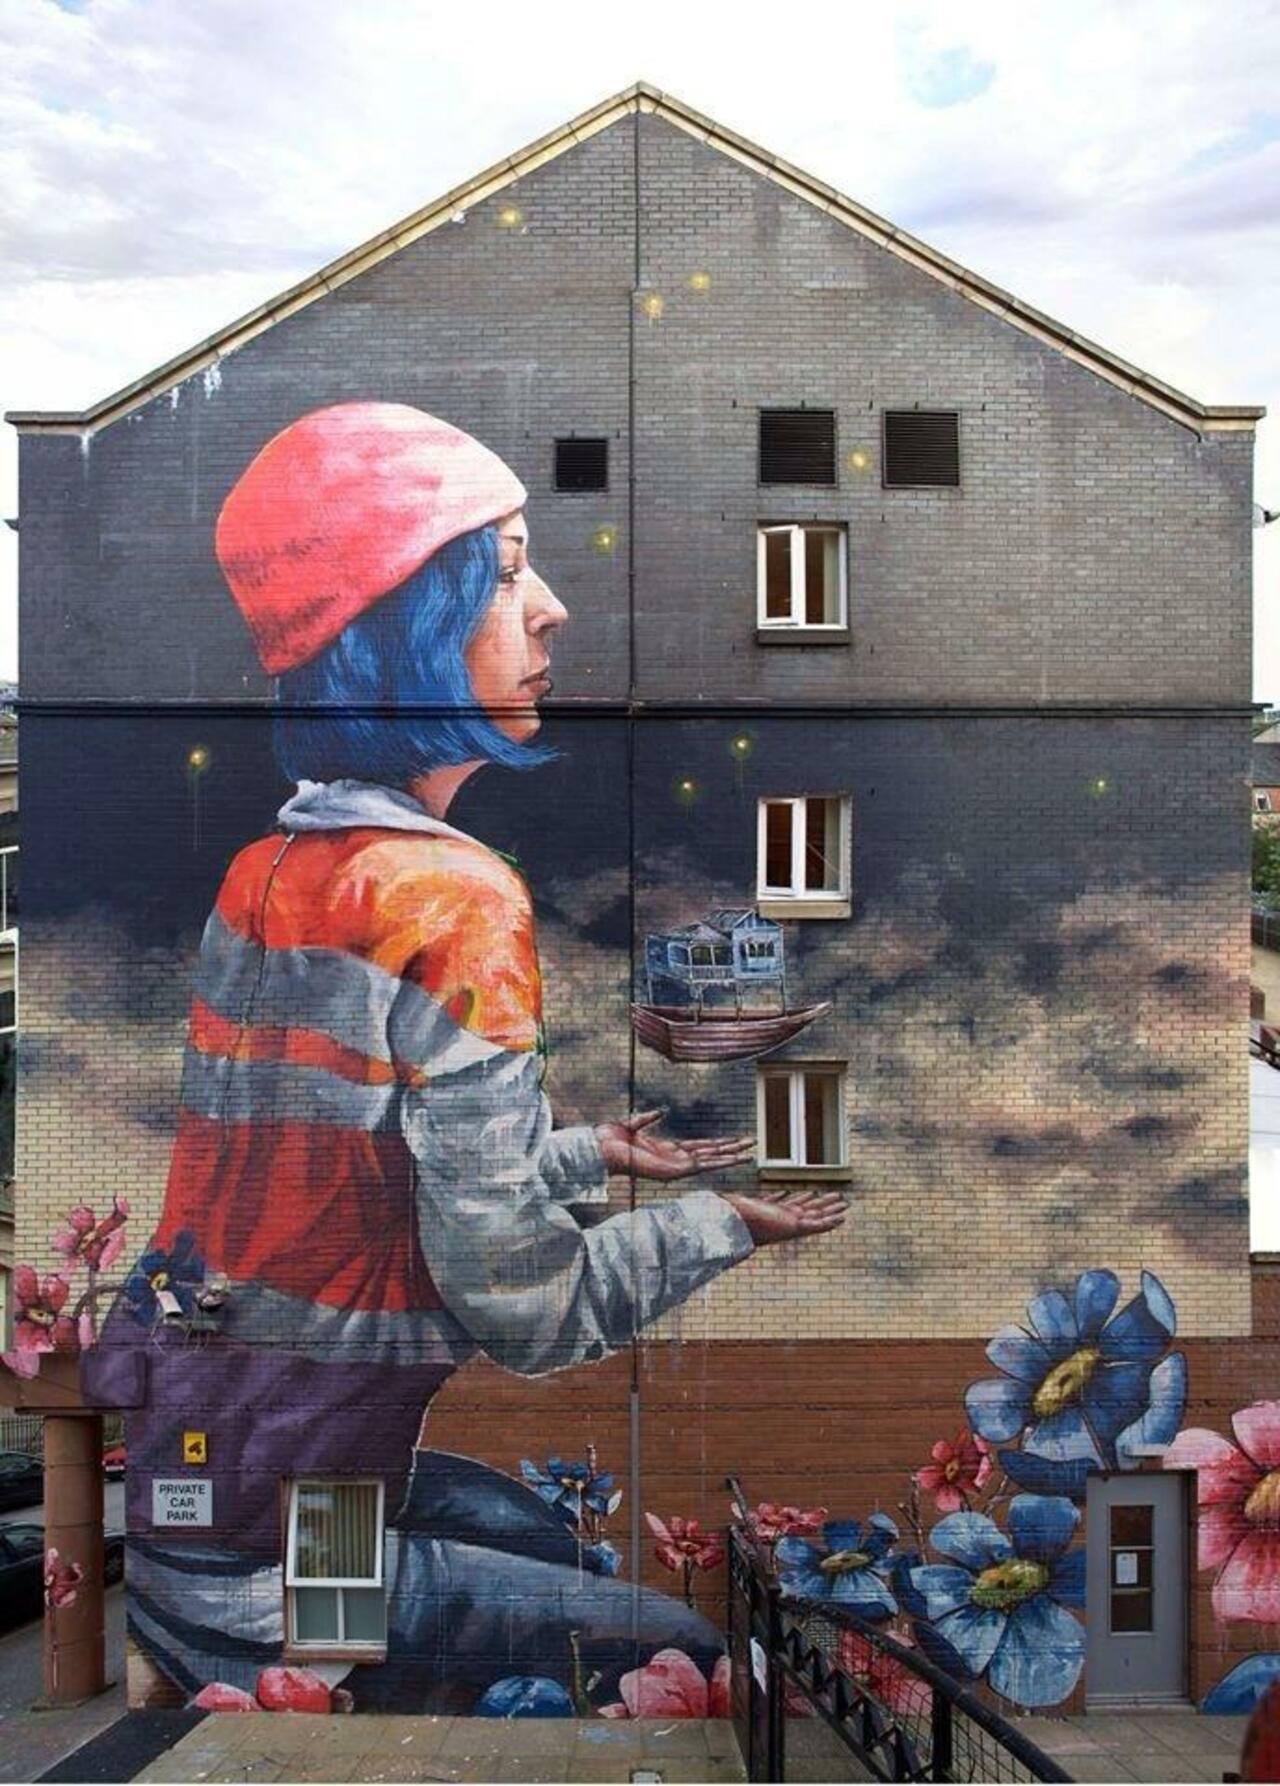 Artist Fintan McGee new wonderful Street Art mural in Glasgow, Scotland #art #mural #graffiti #streetart http://t.co/v61qtwOOCn